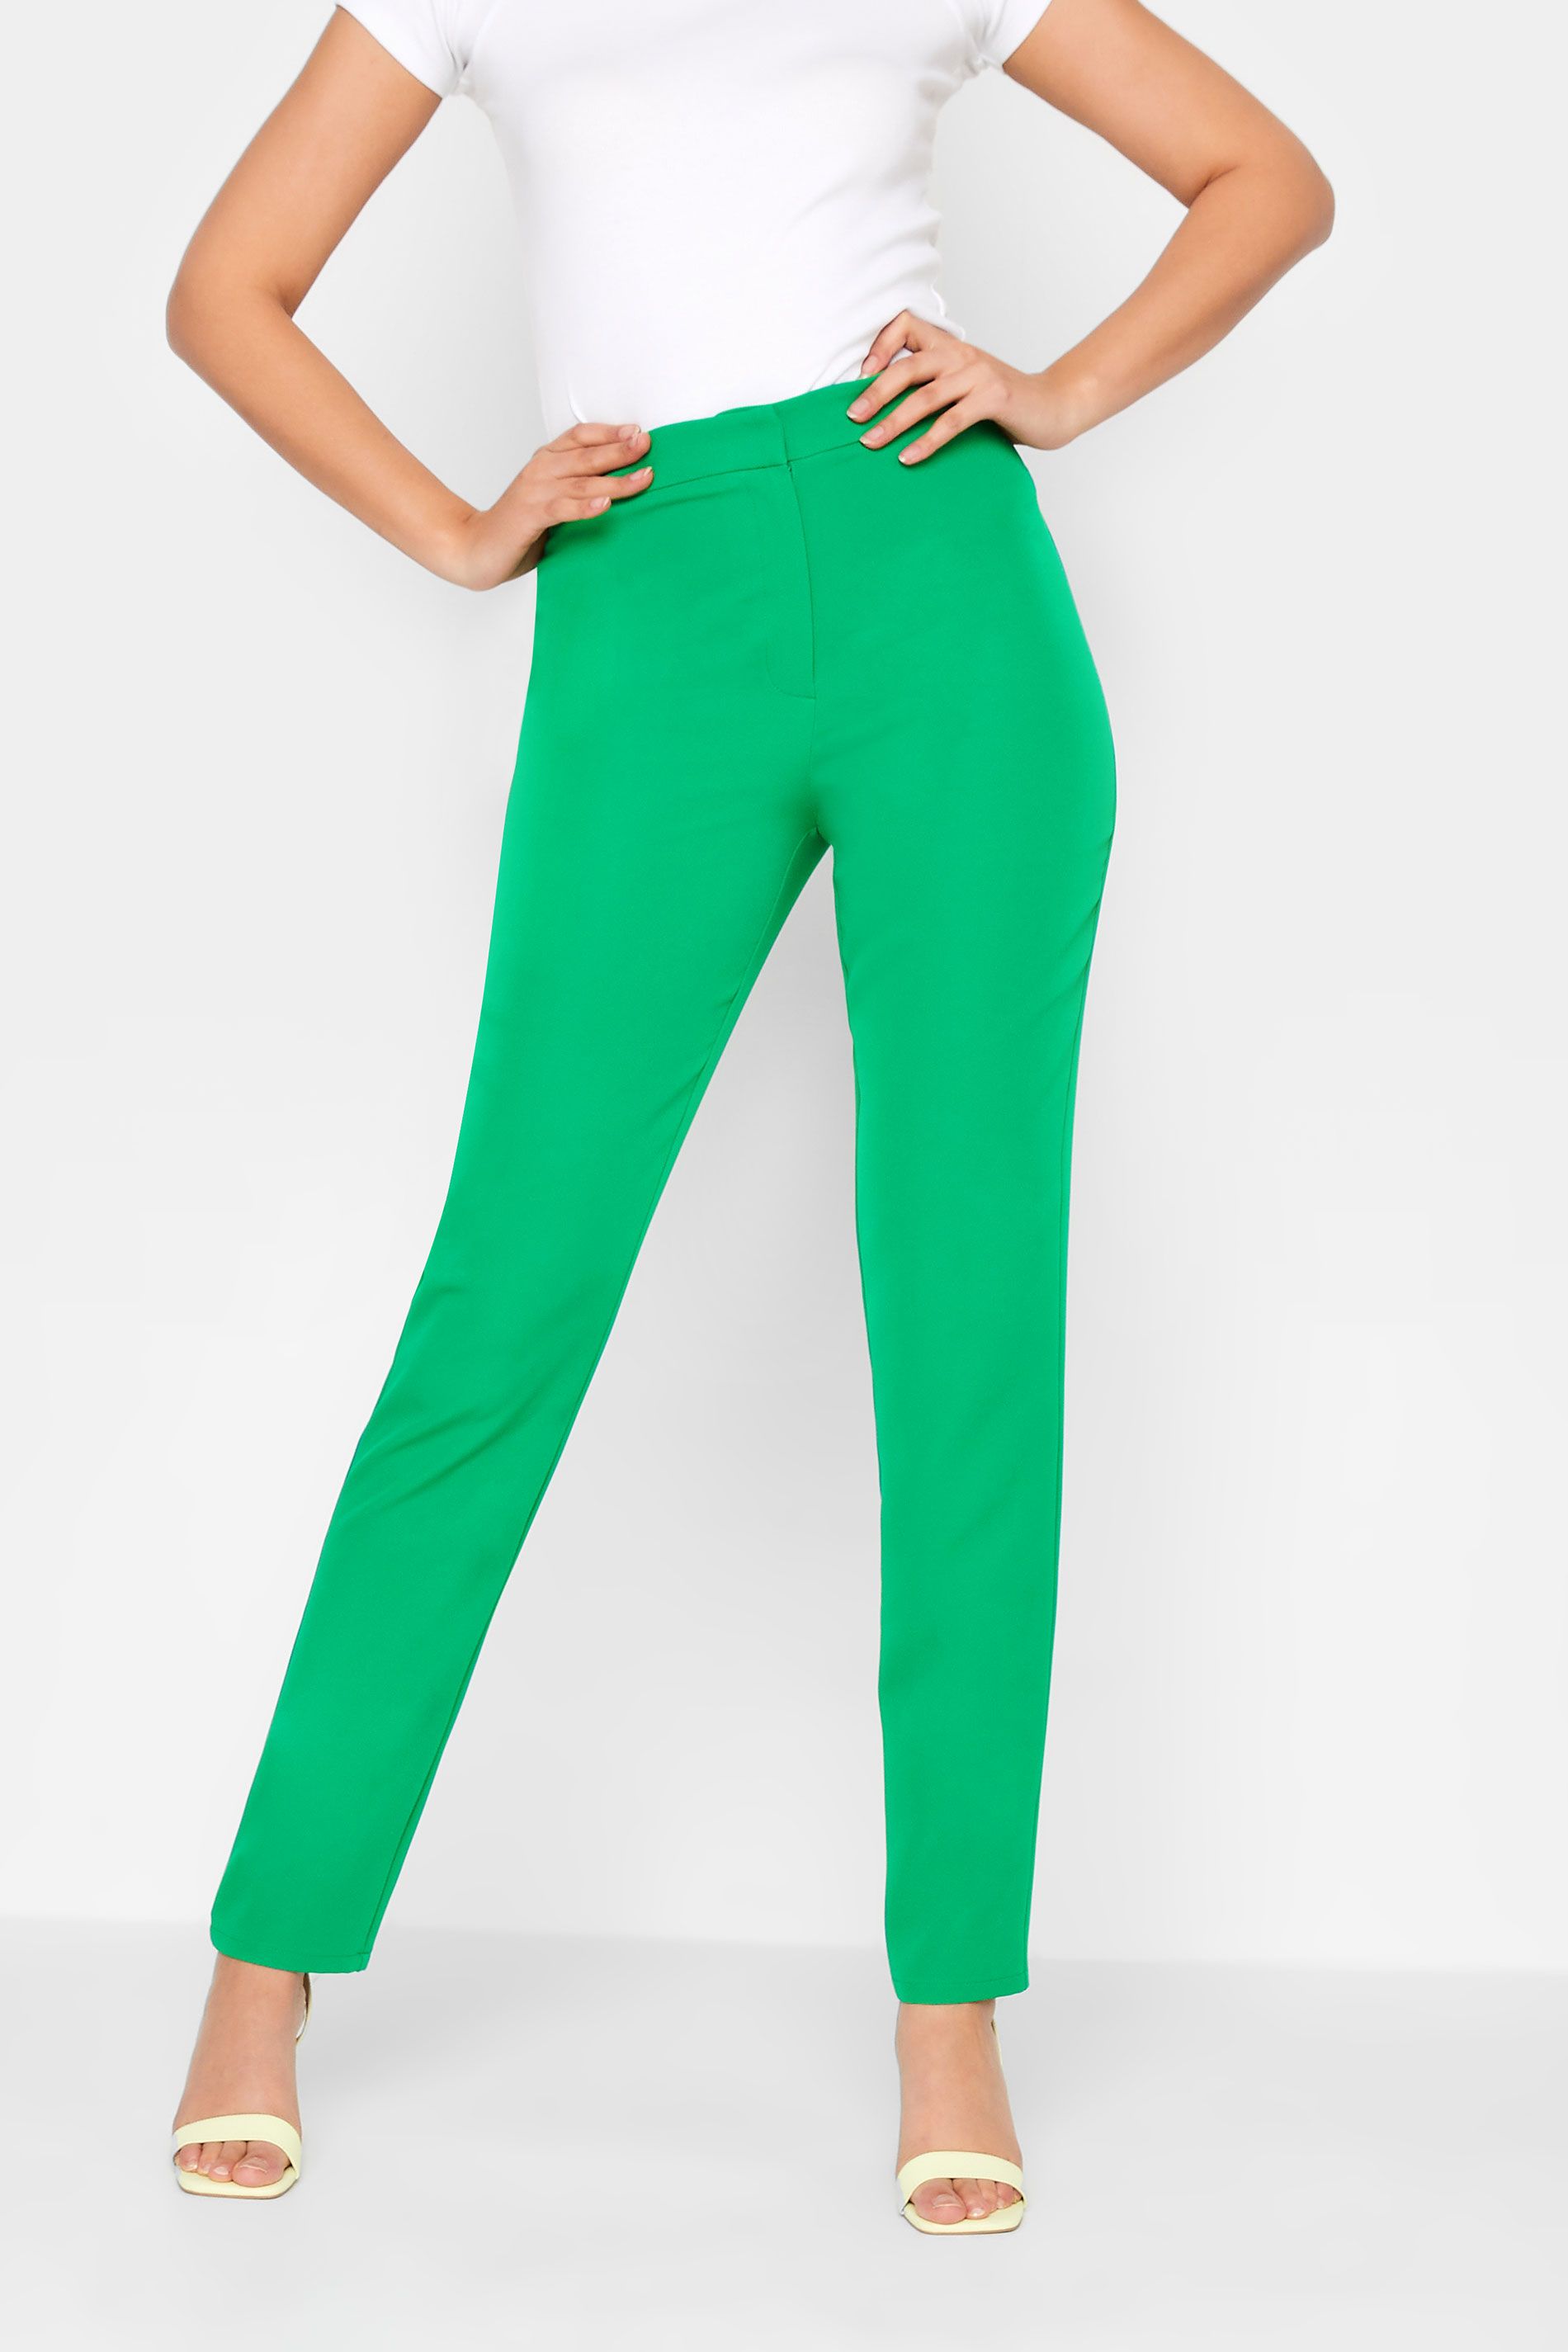 LTS Tall Green Slim Leg Trousers | Long Tall Sally